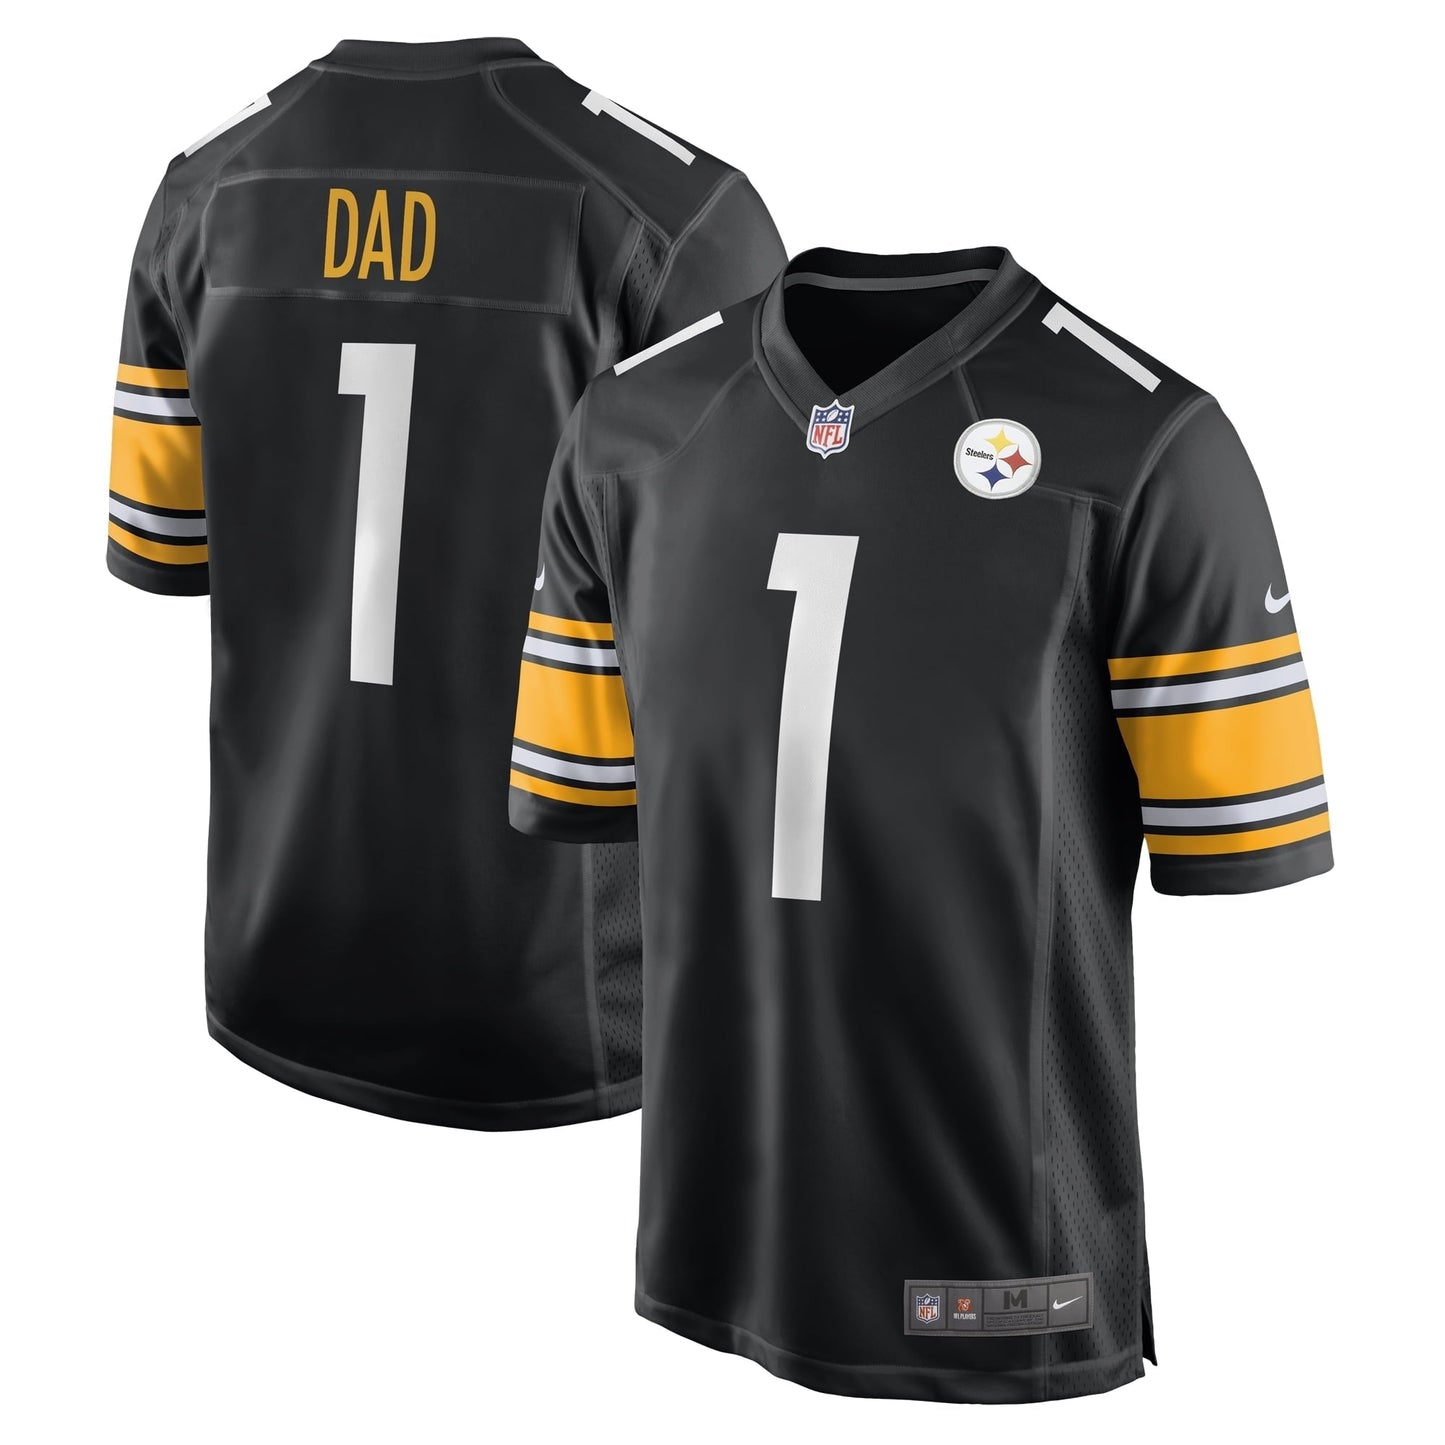 Men's Nike Number 1 Dad Black Pittsburgh Steelers Game Jersey